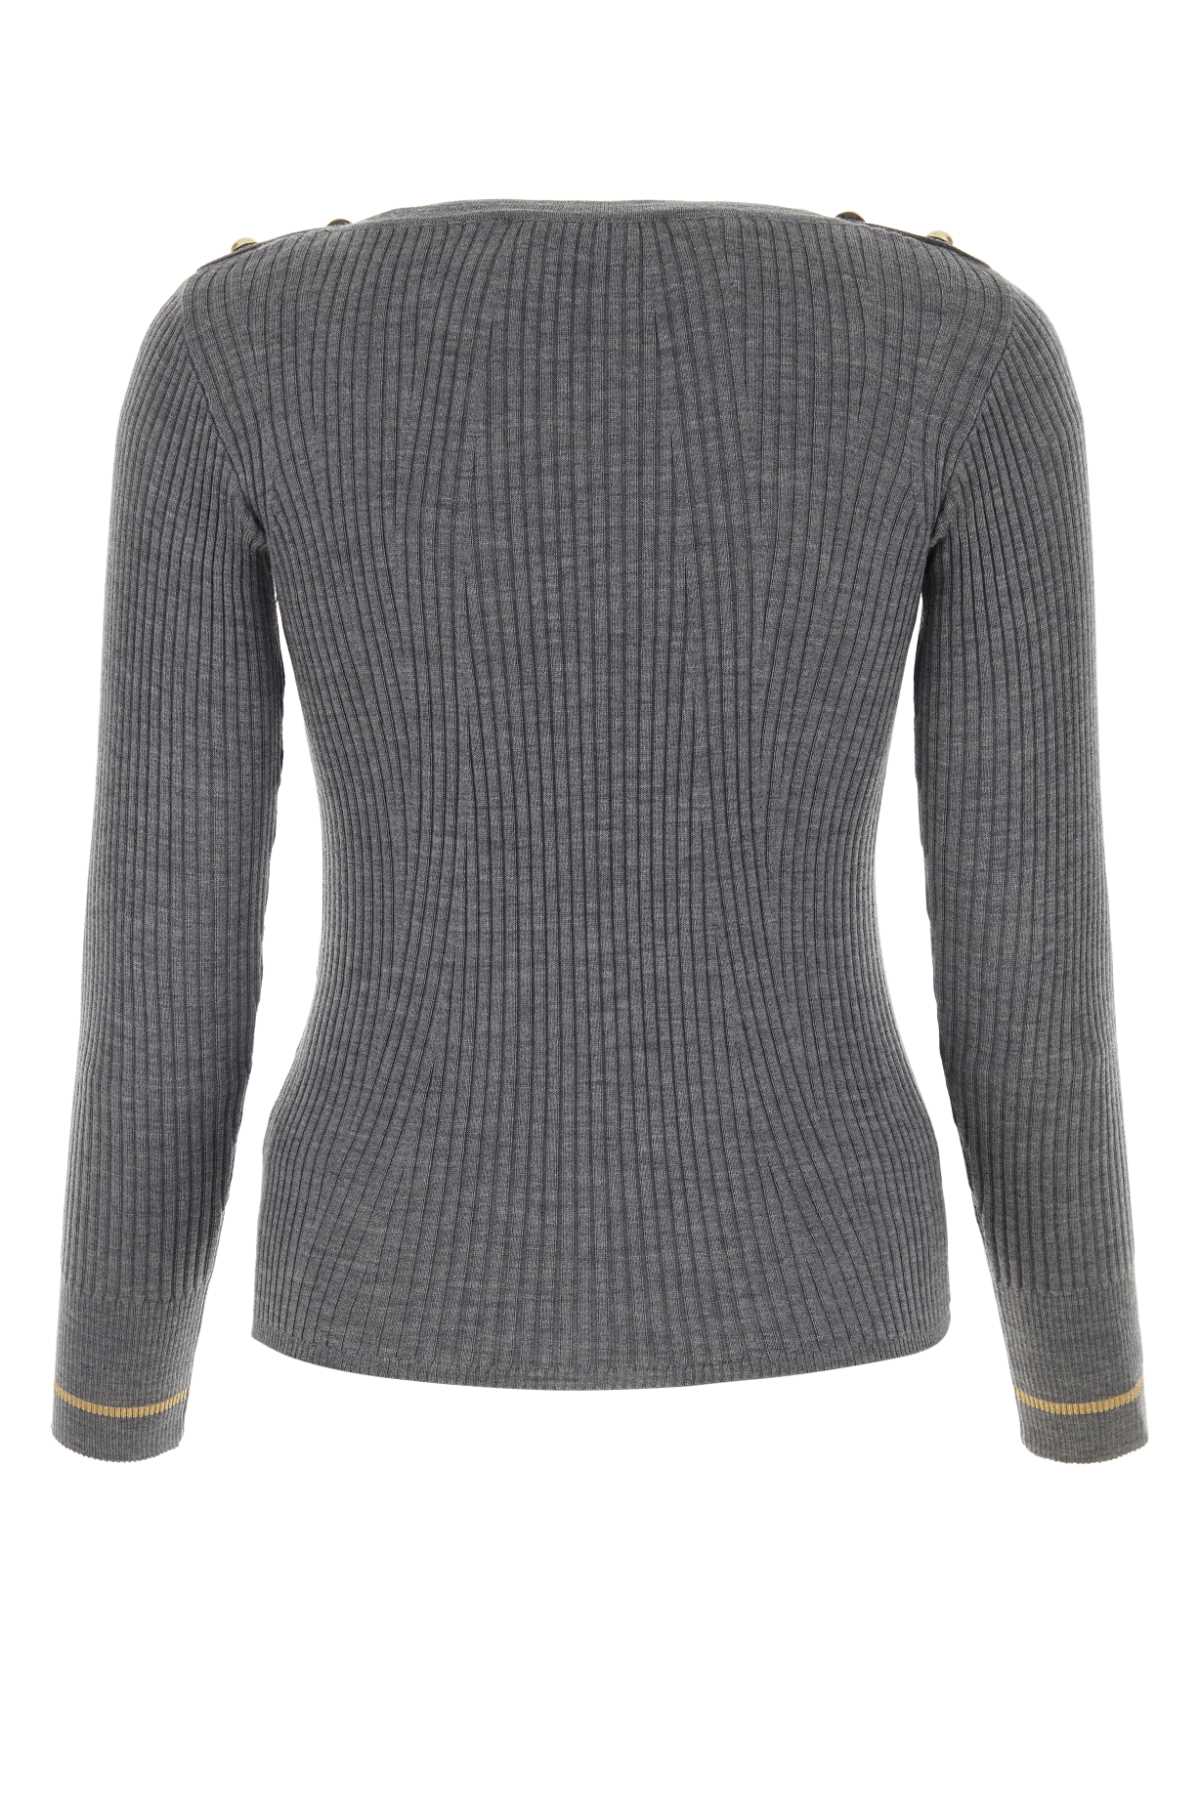 Max Mara Grey Wool Sweater In Grigiomelange